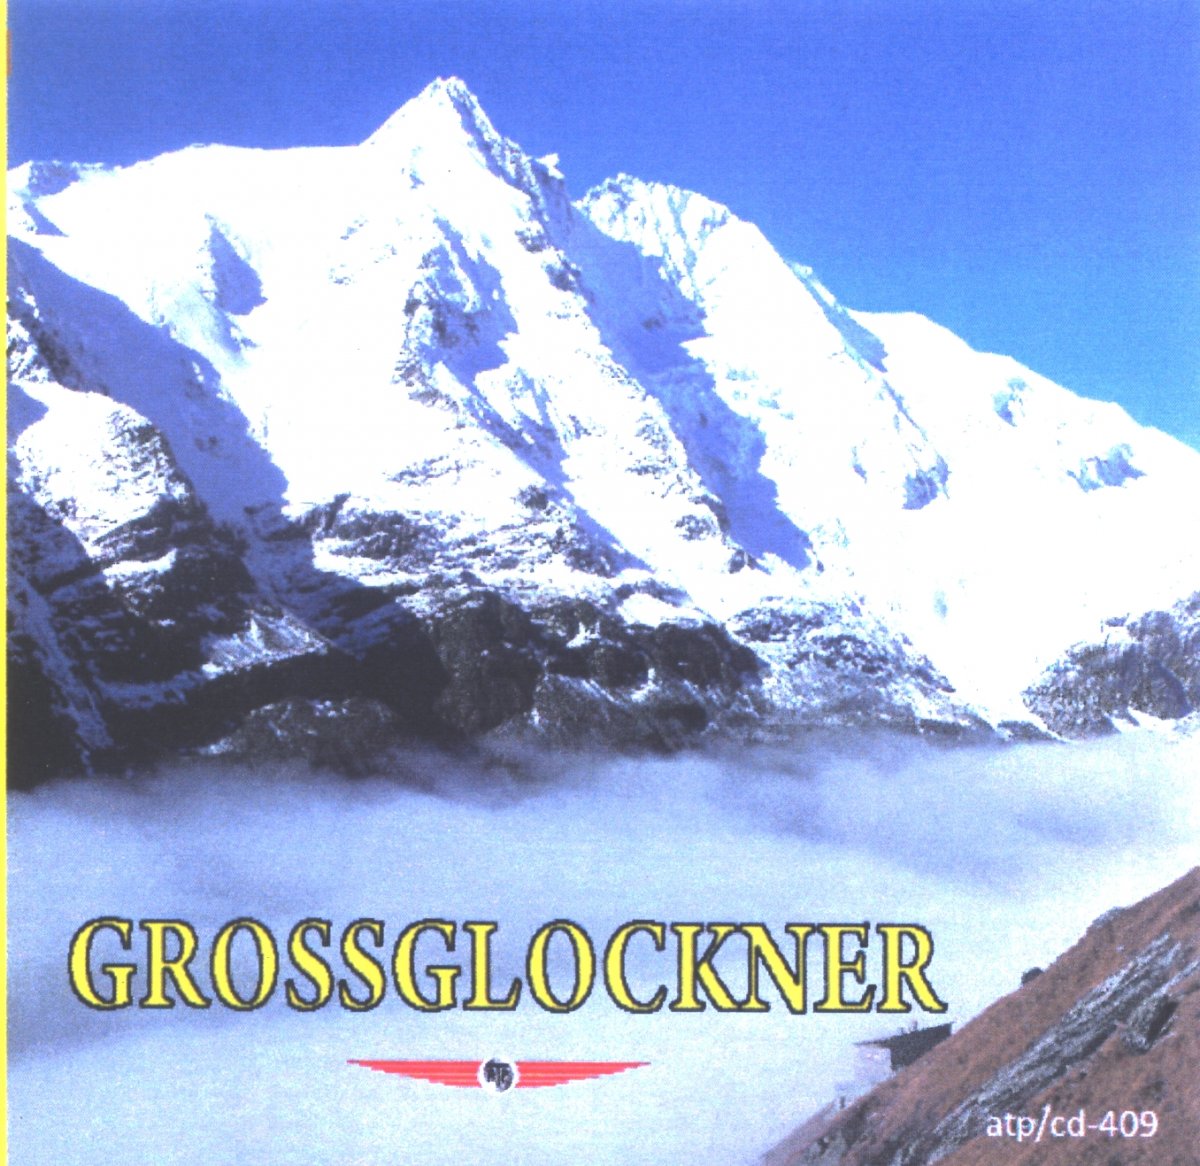 Grossglockner - click here